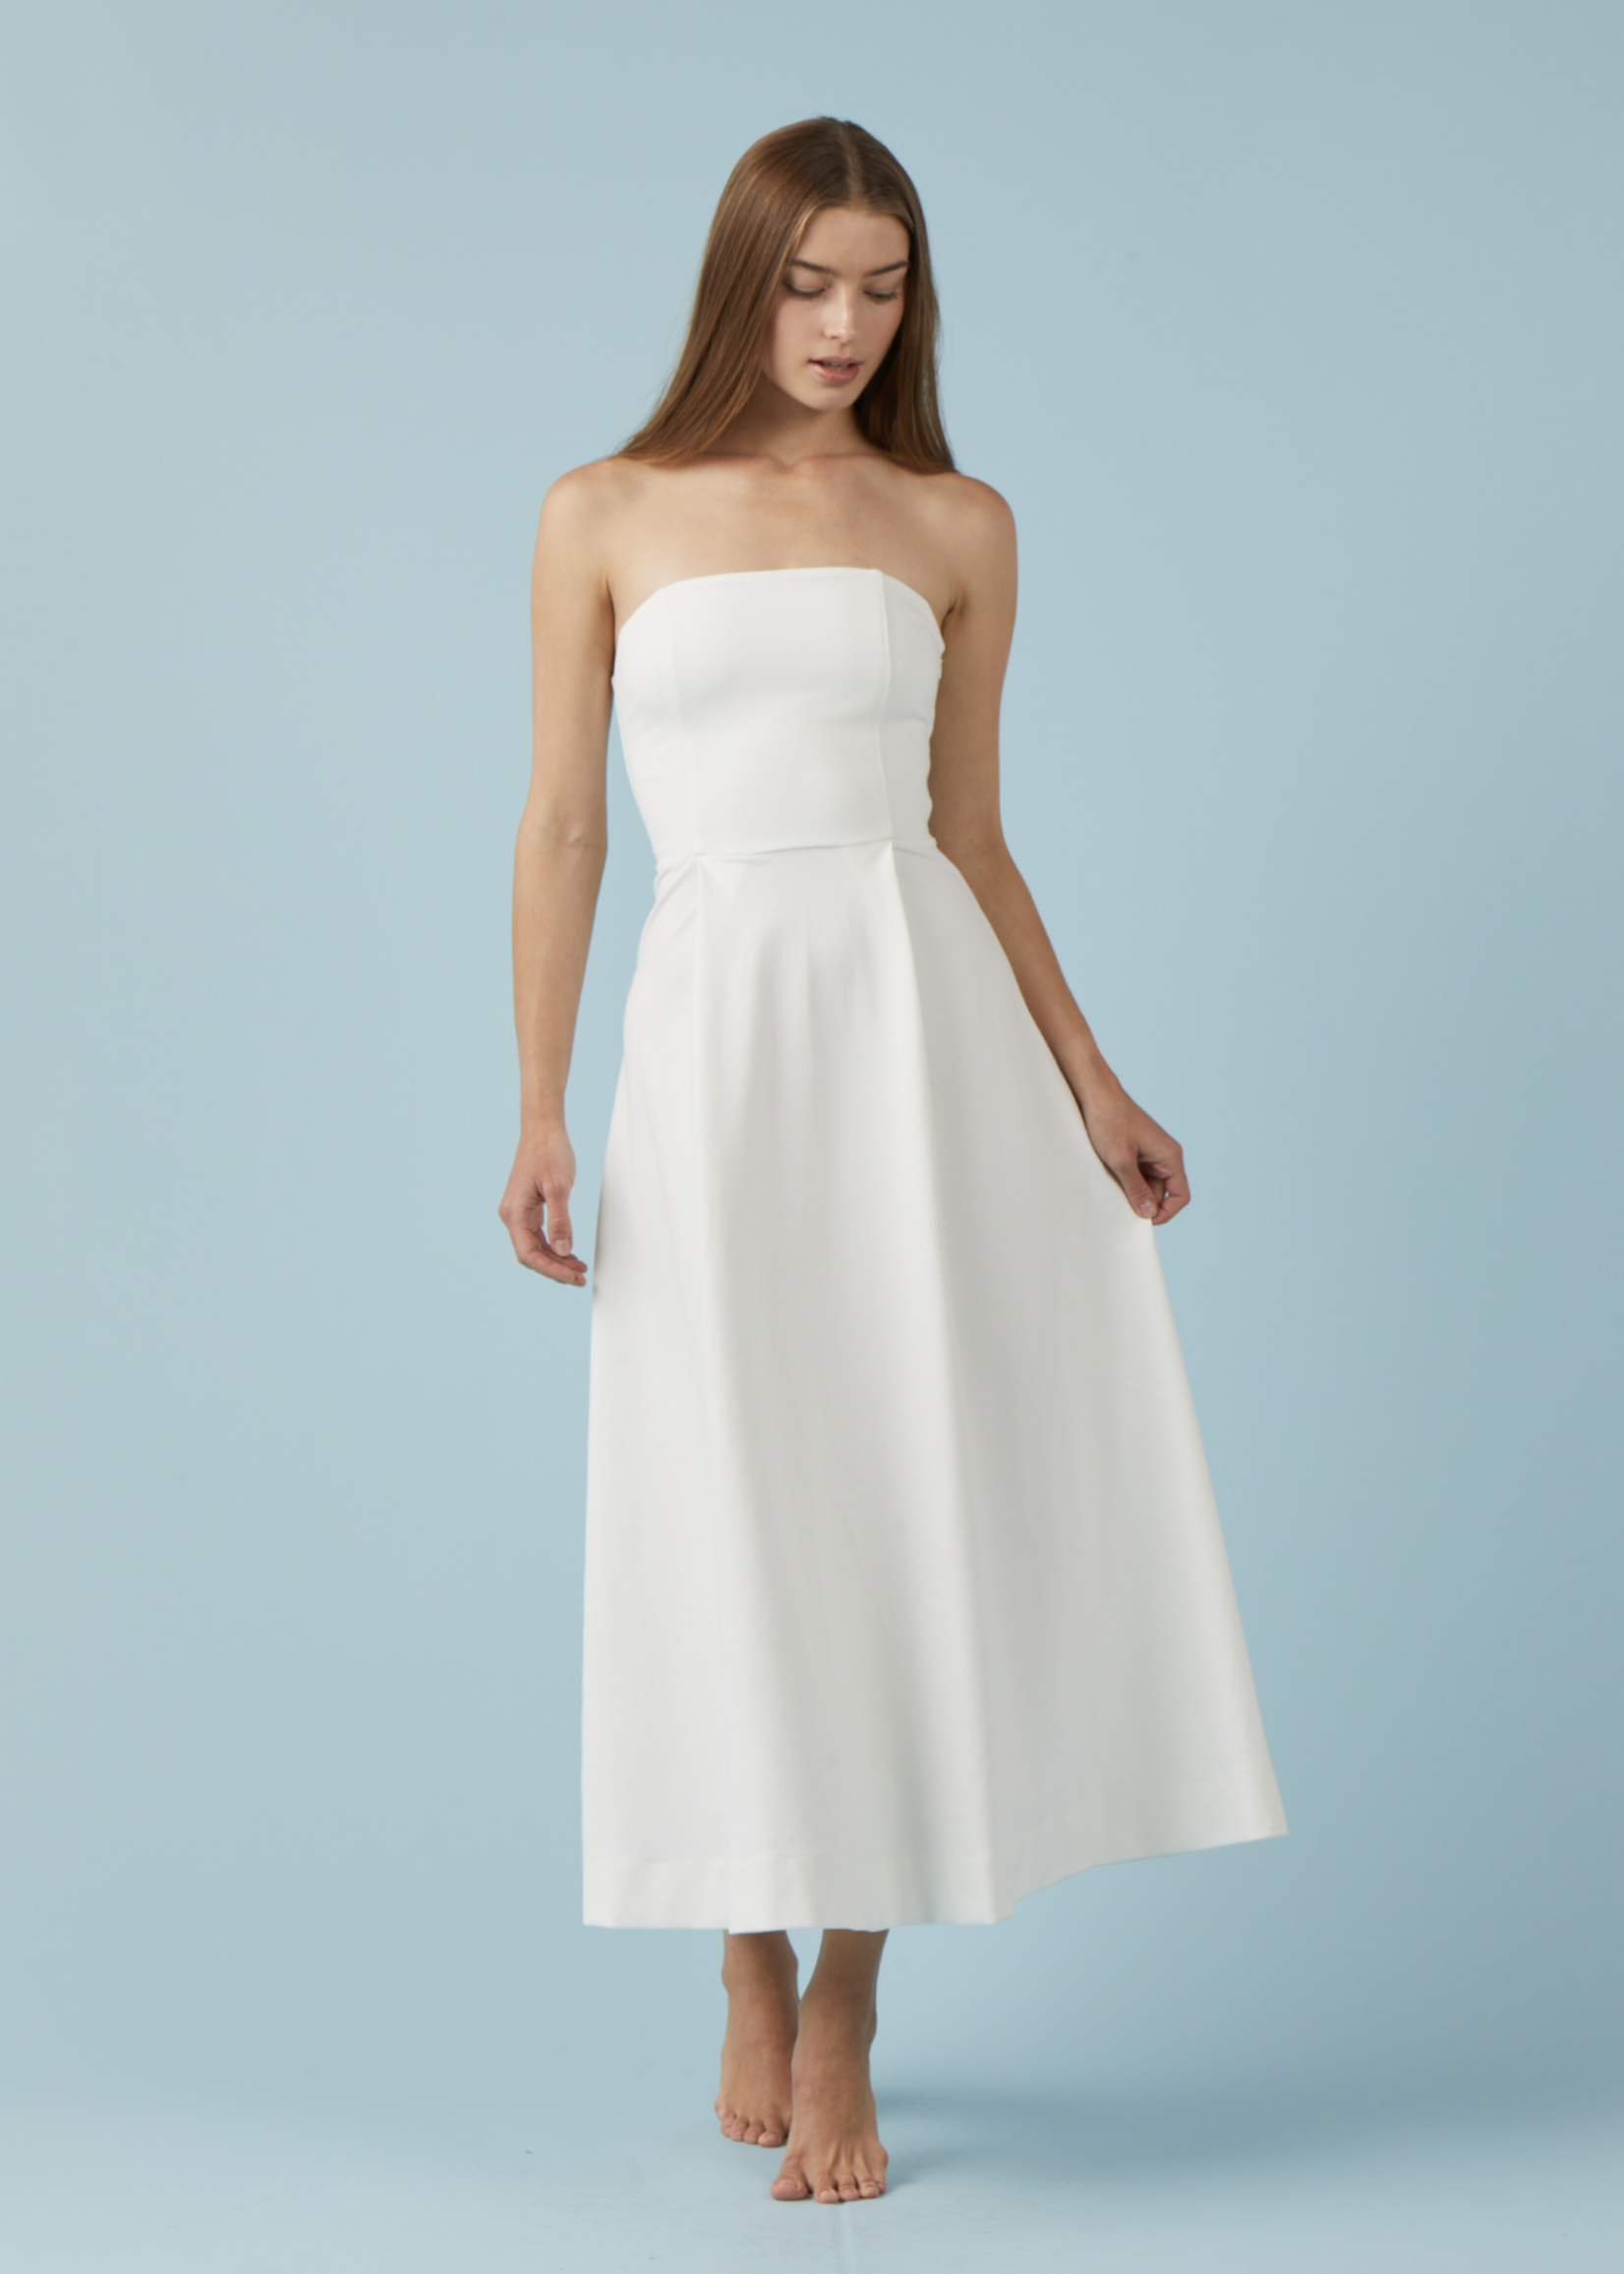 Elitaire Boutique Ponte Strapless Dress in White